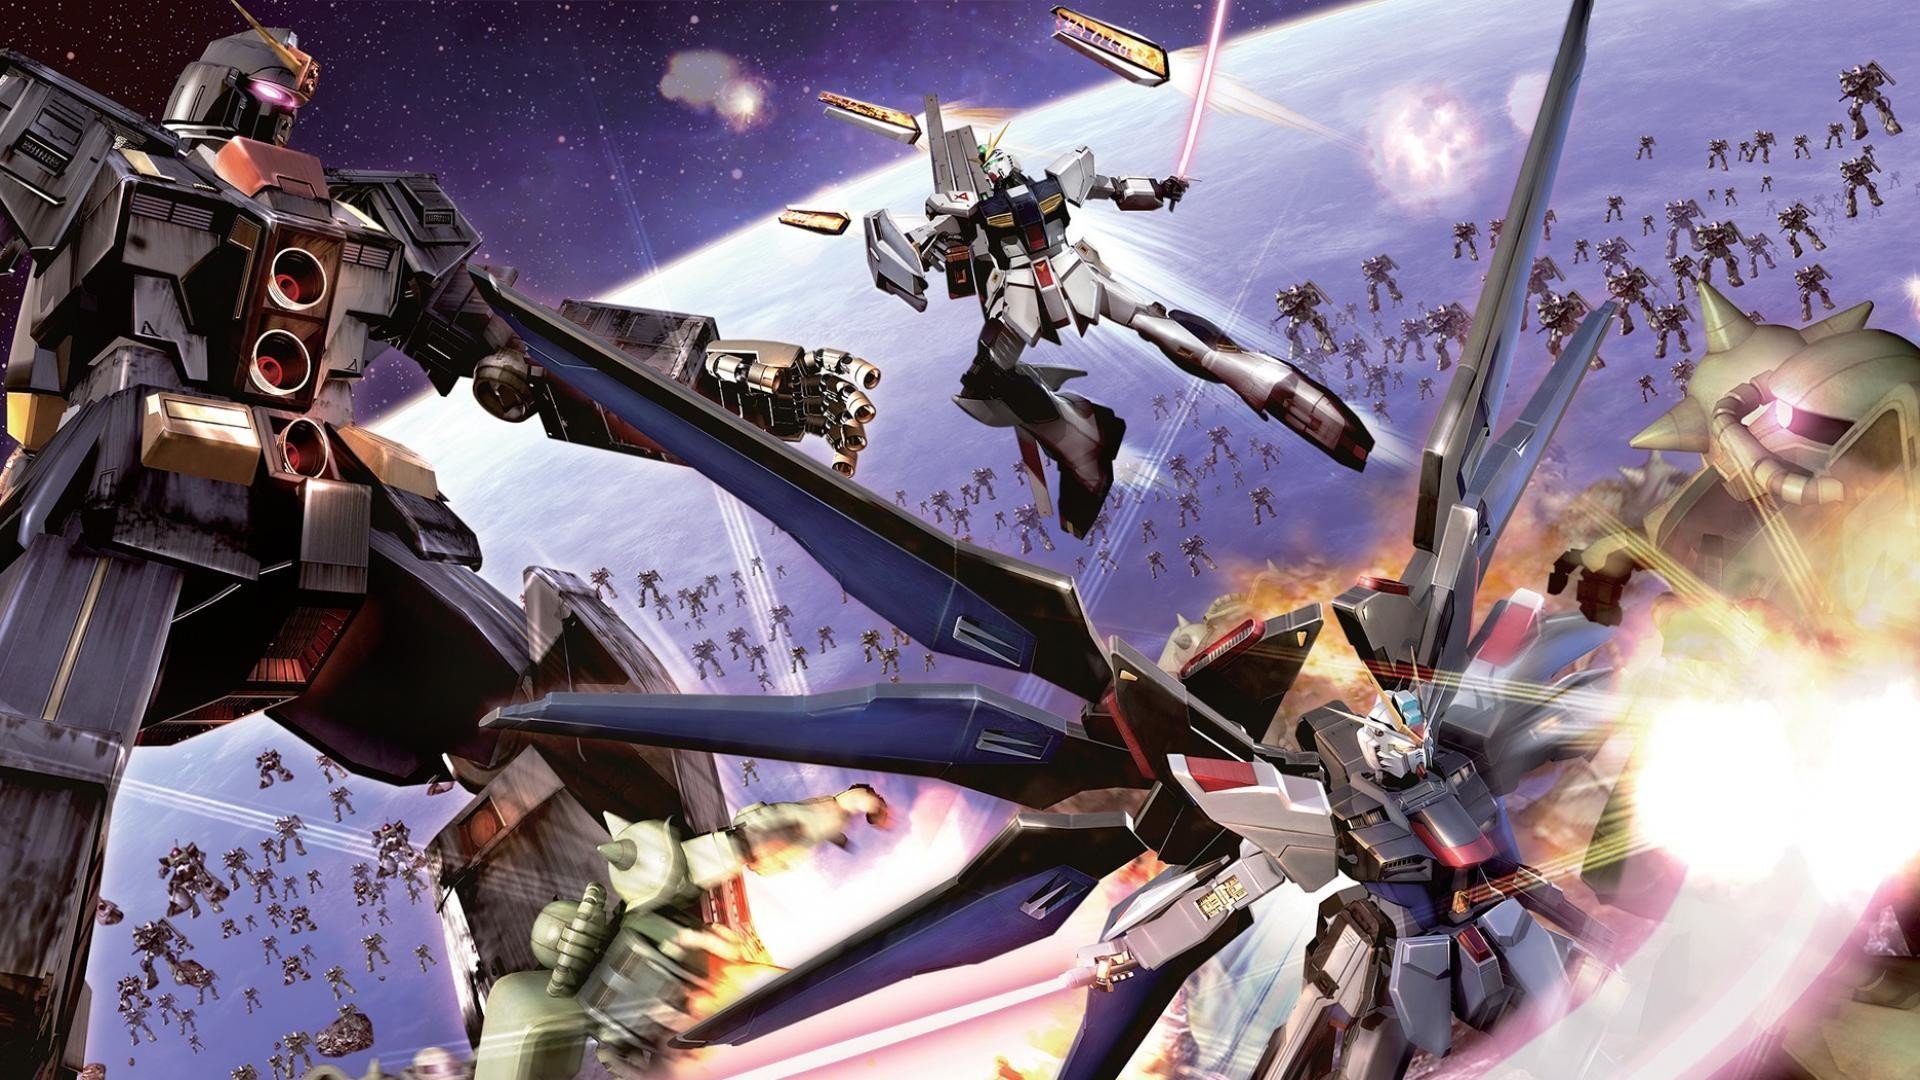 1920x1080 G <b>Gundam Wallpaper</b> - WallpaperSafari